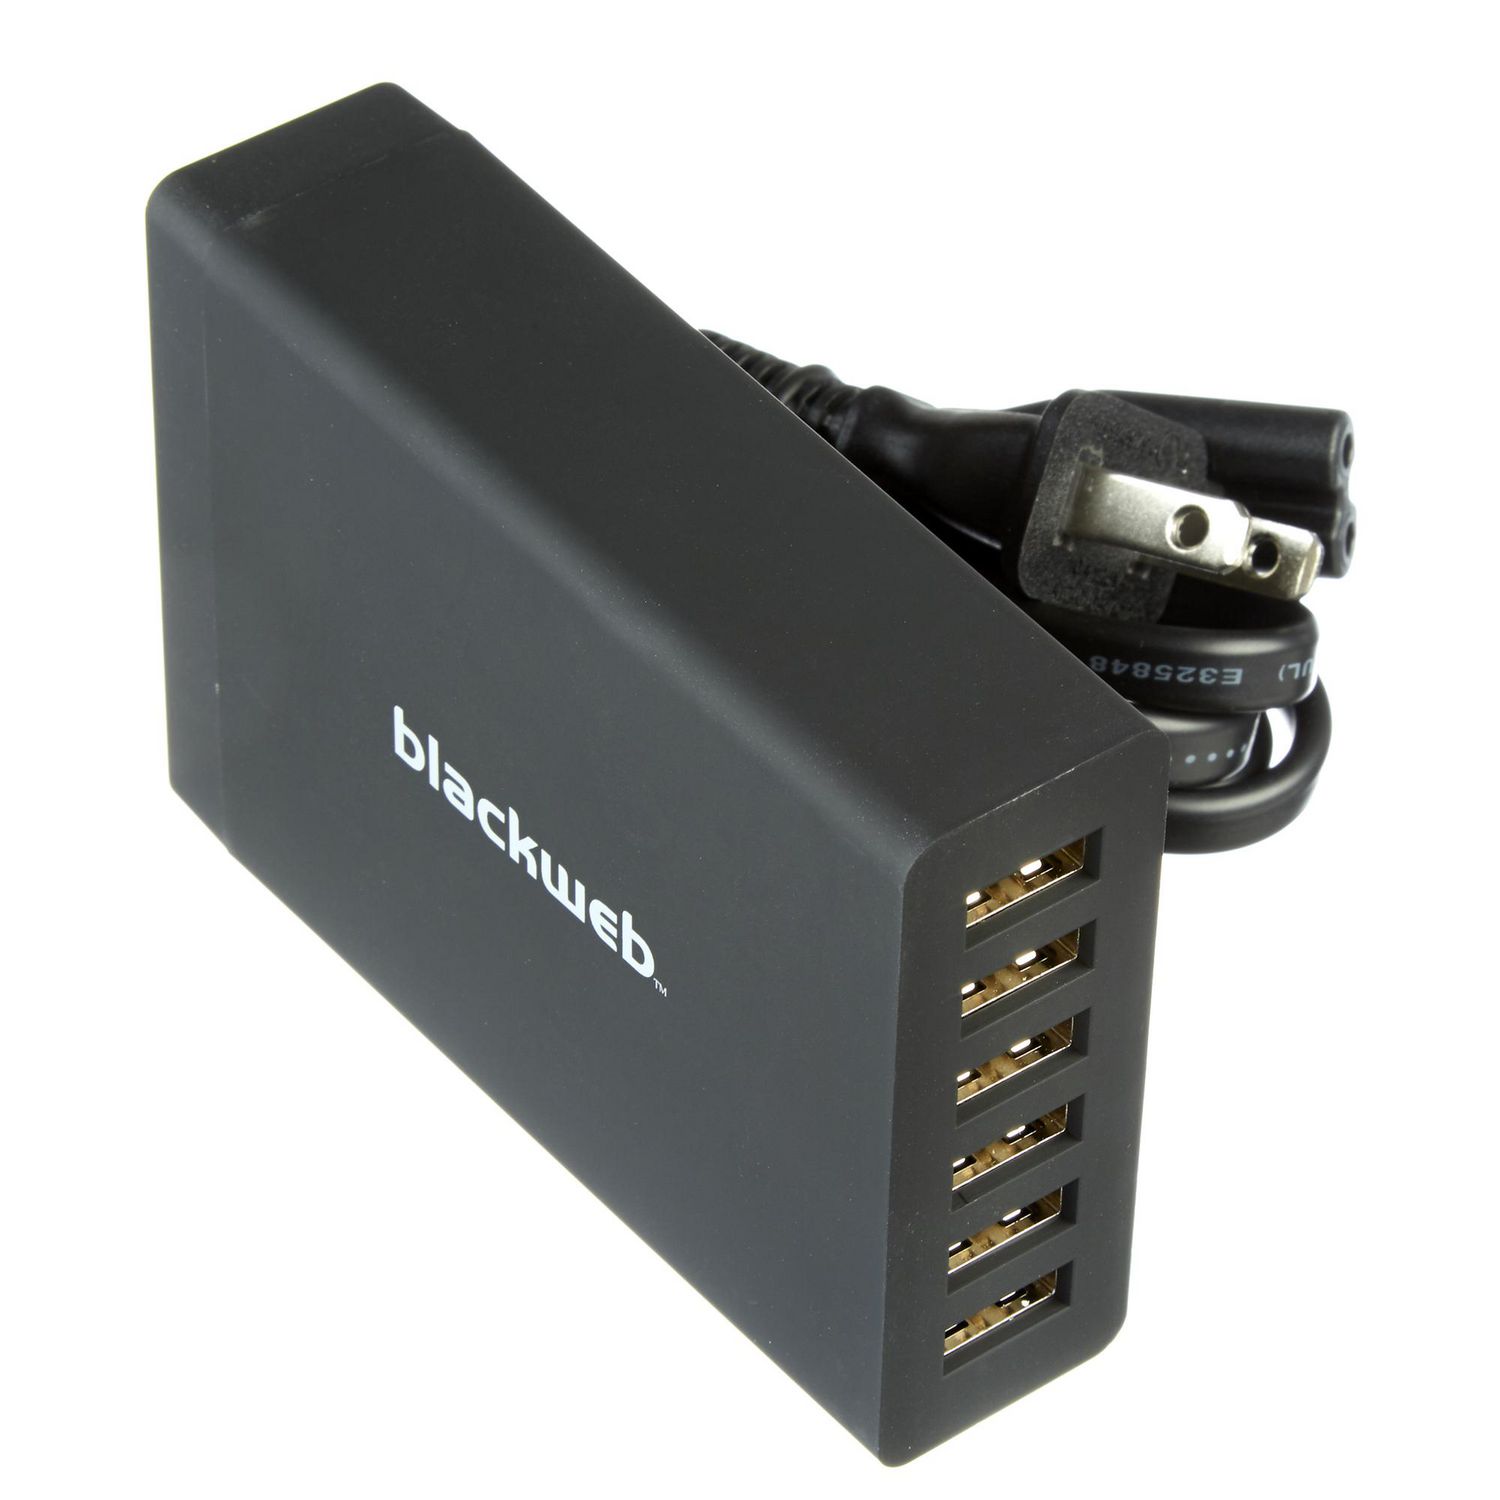 blackweb 6-Port USB Wall Charger | Walmart Canada